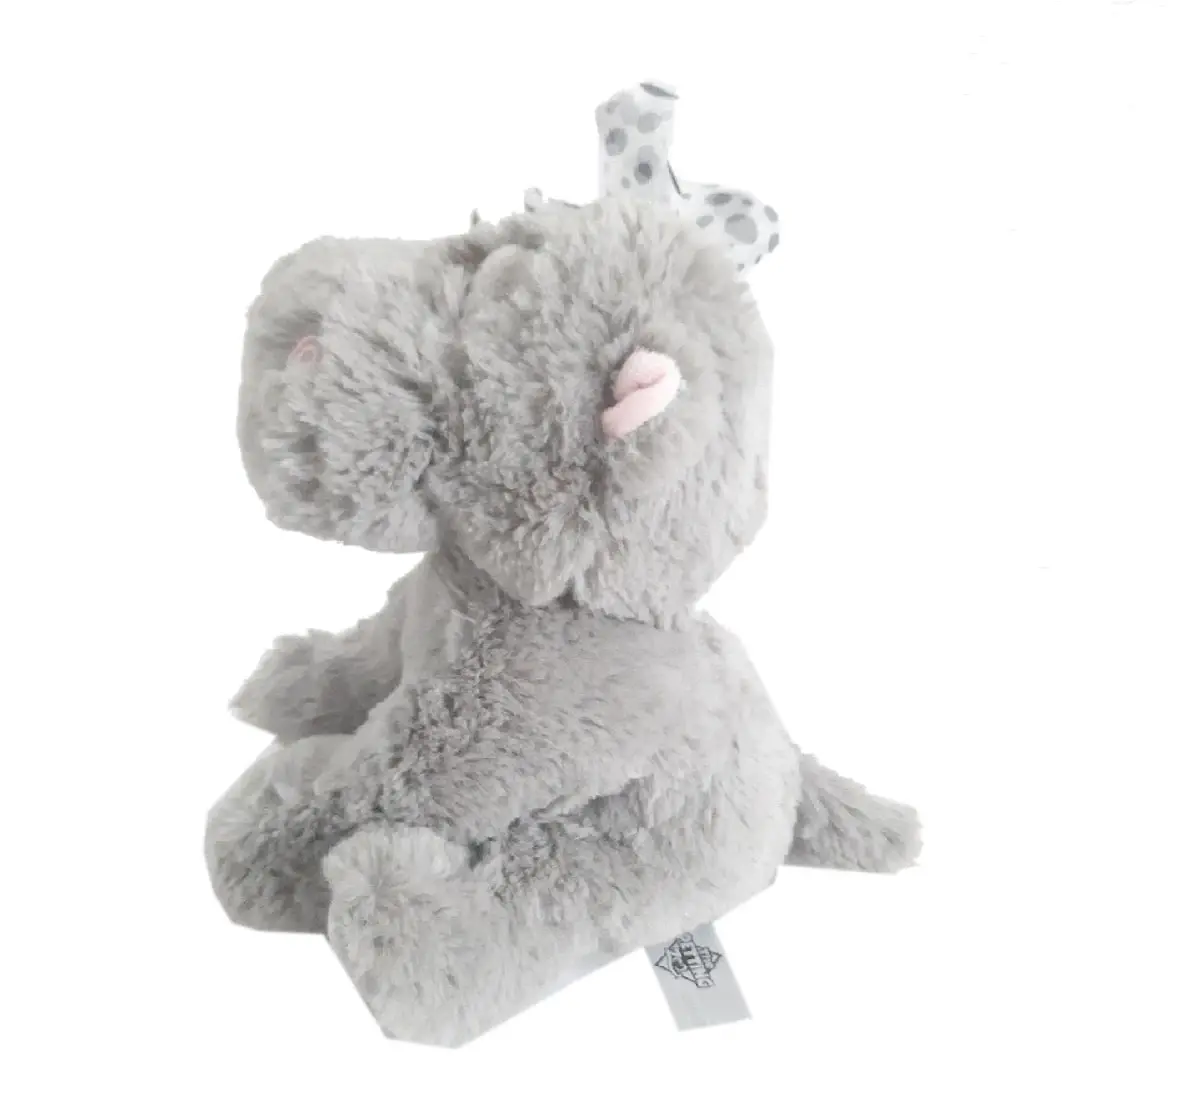 Lash Z Hippo Soft Toy 12"28Cm 